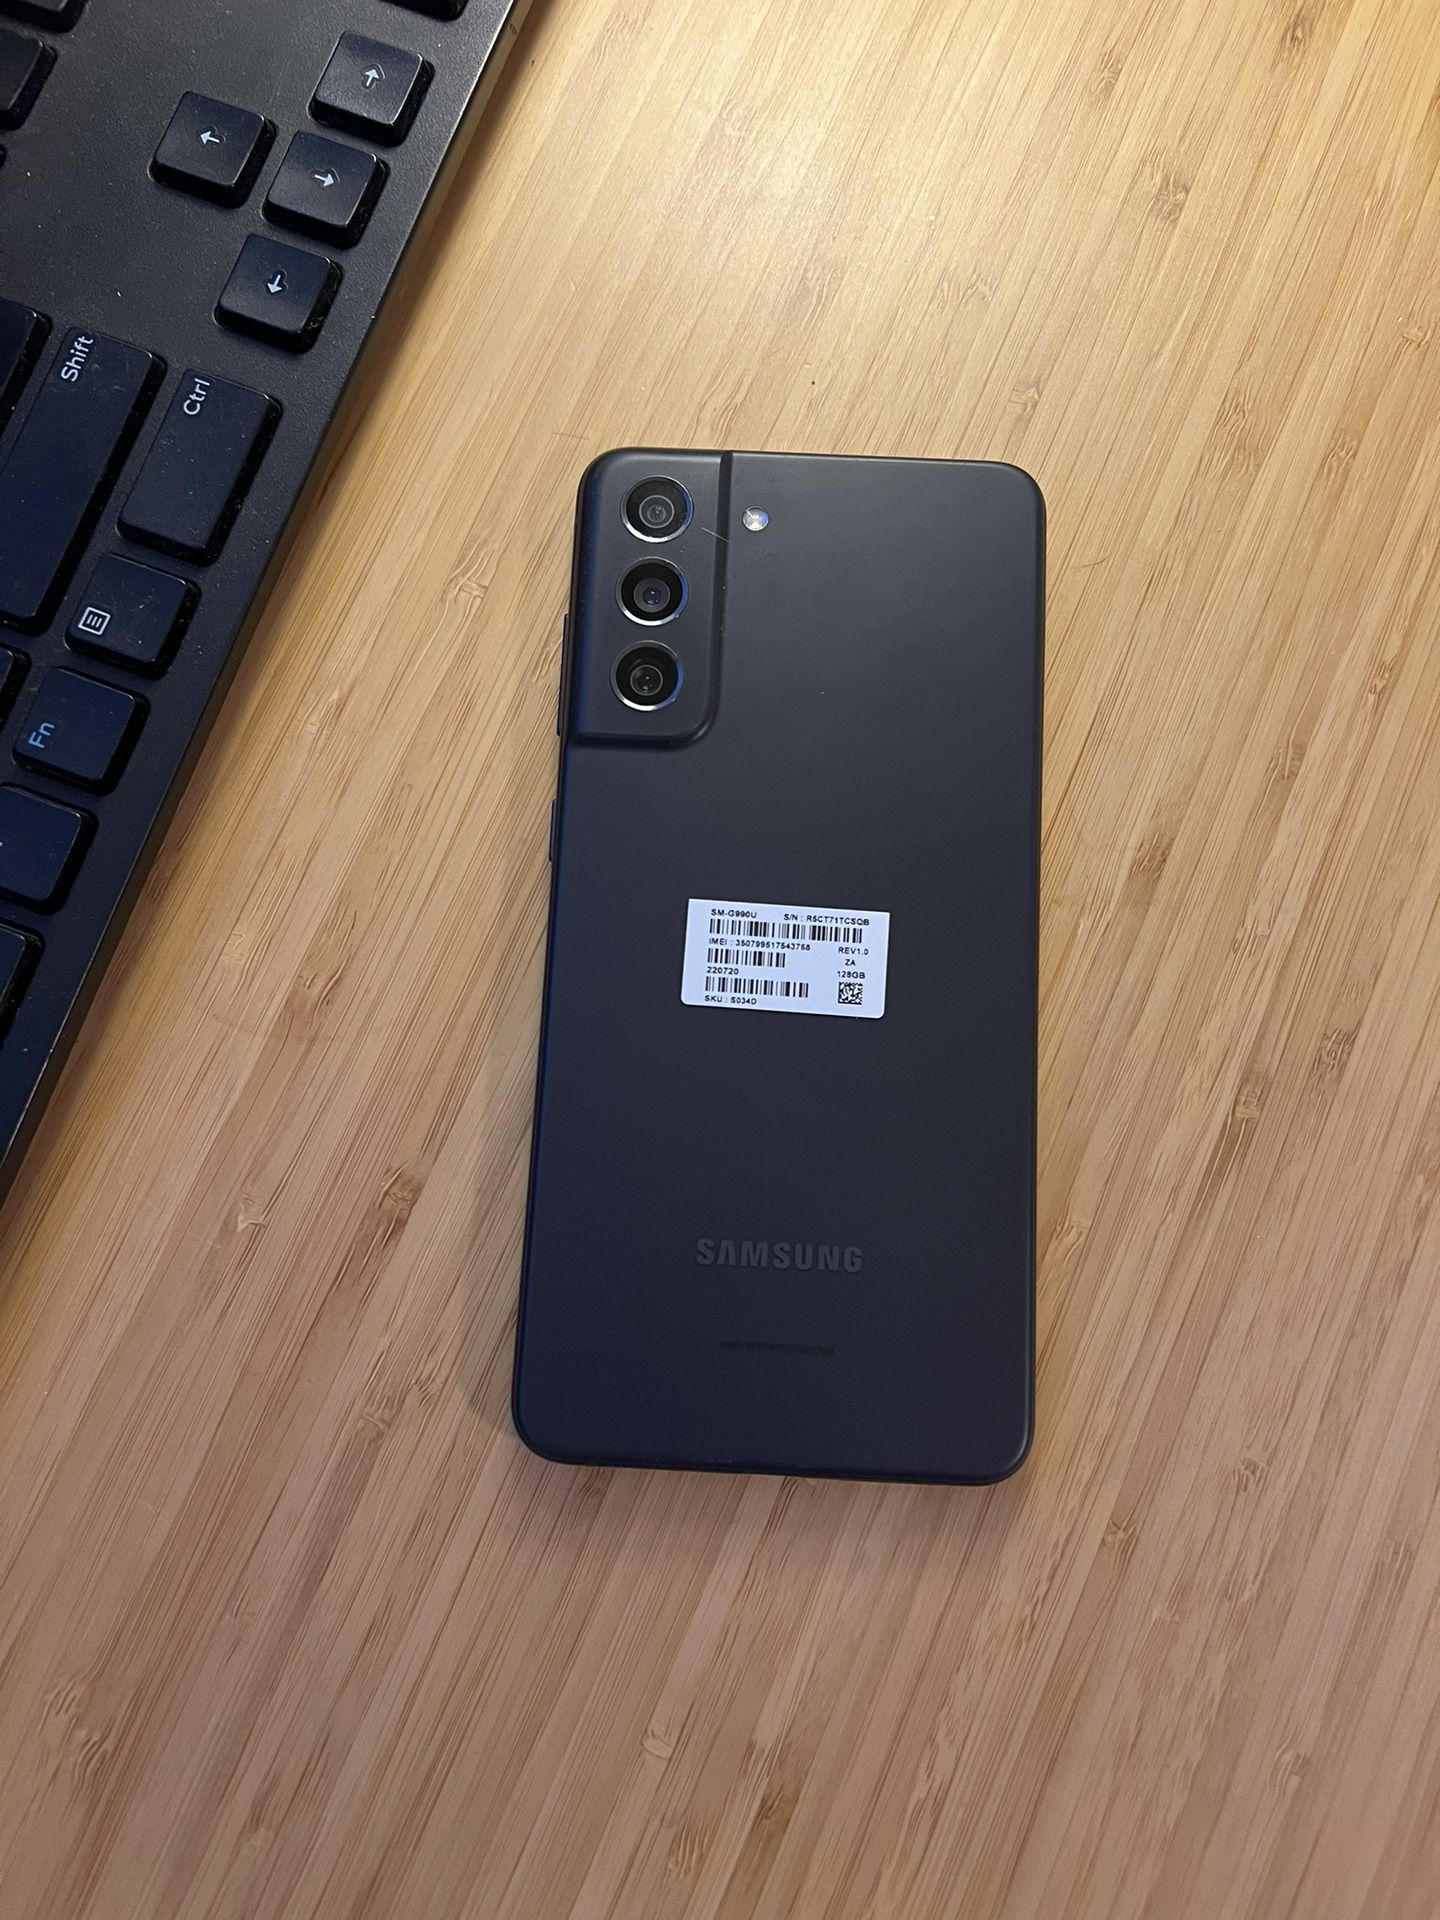 Samsung Galaxy S21FE 5G fully unlocked 128gb great condition black color 